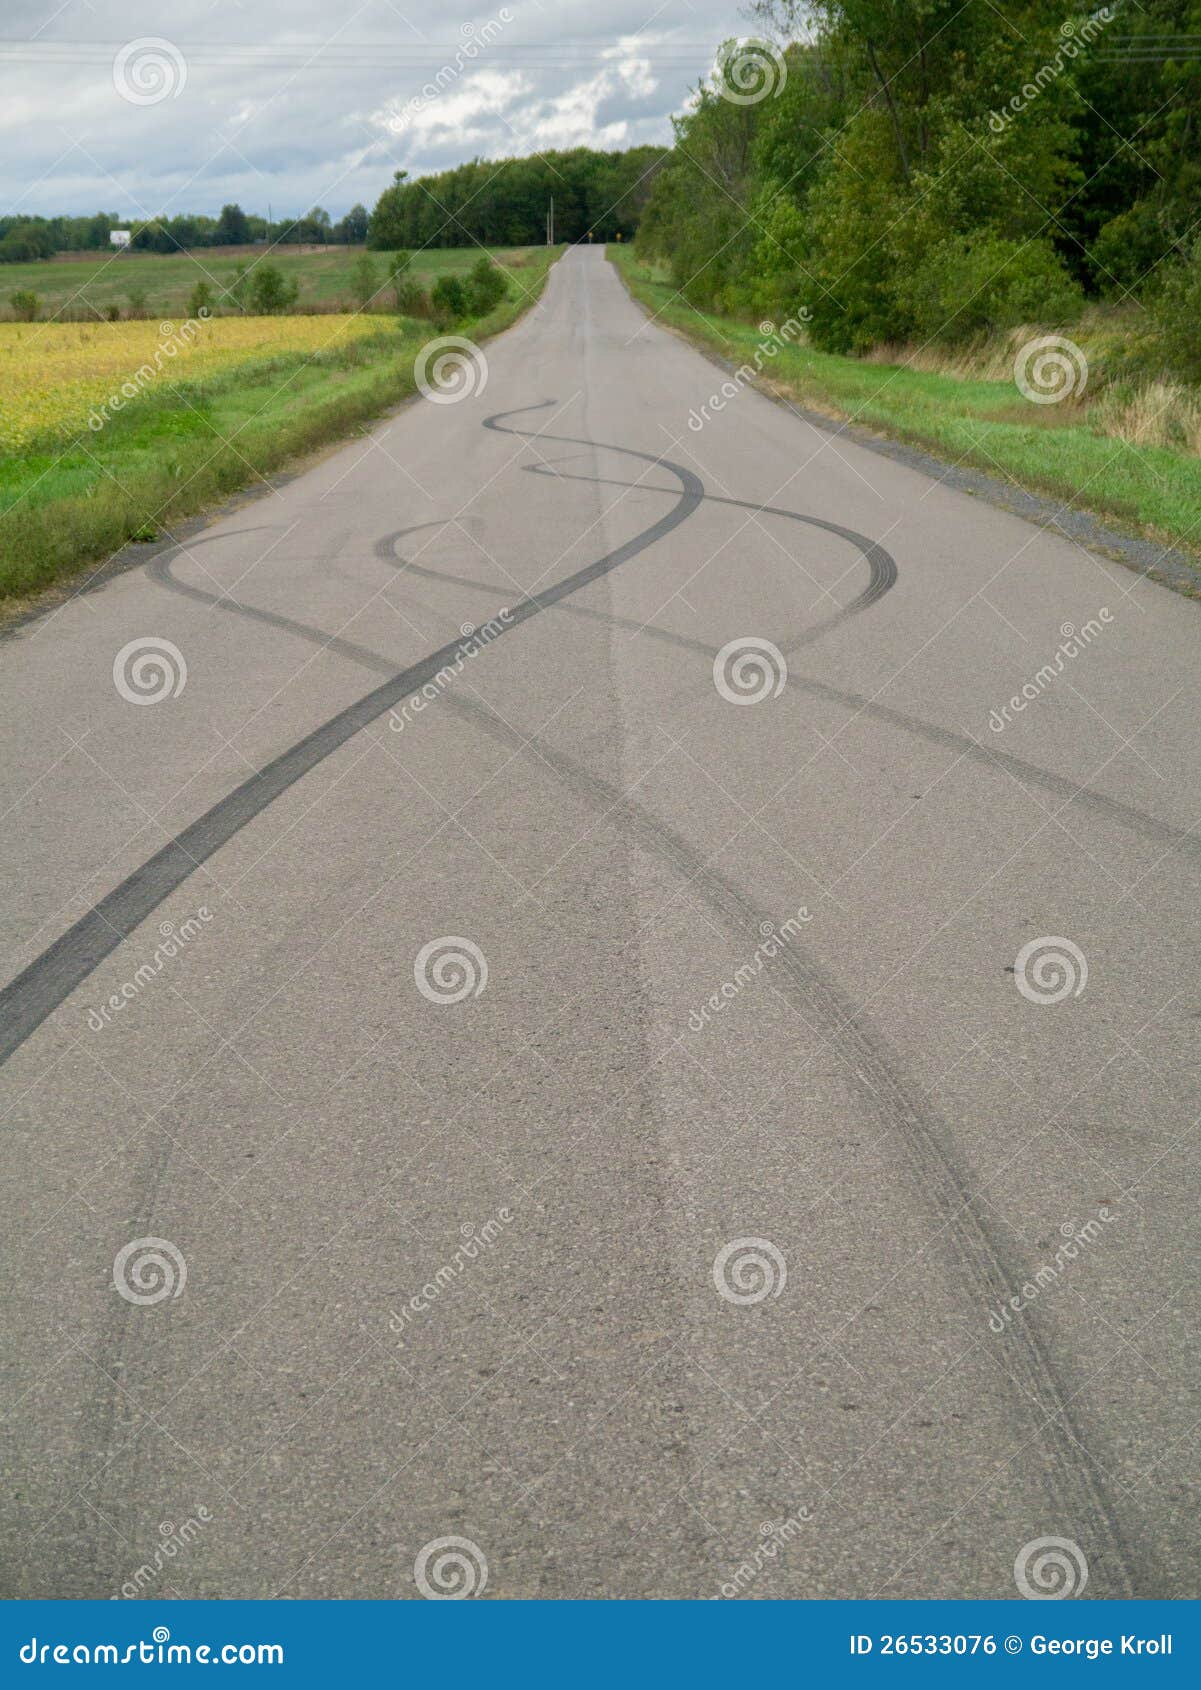 https://thumbs.dreamstime.com/z/skid-marks-road-26533076.jpg